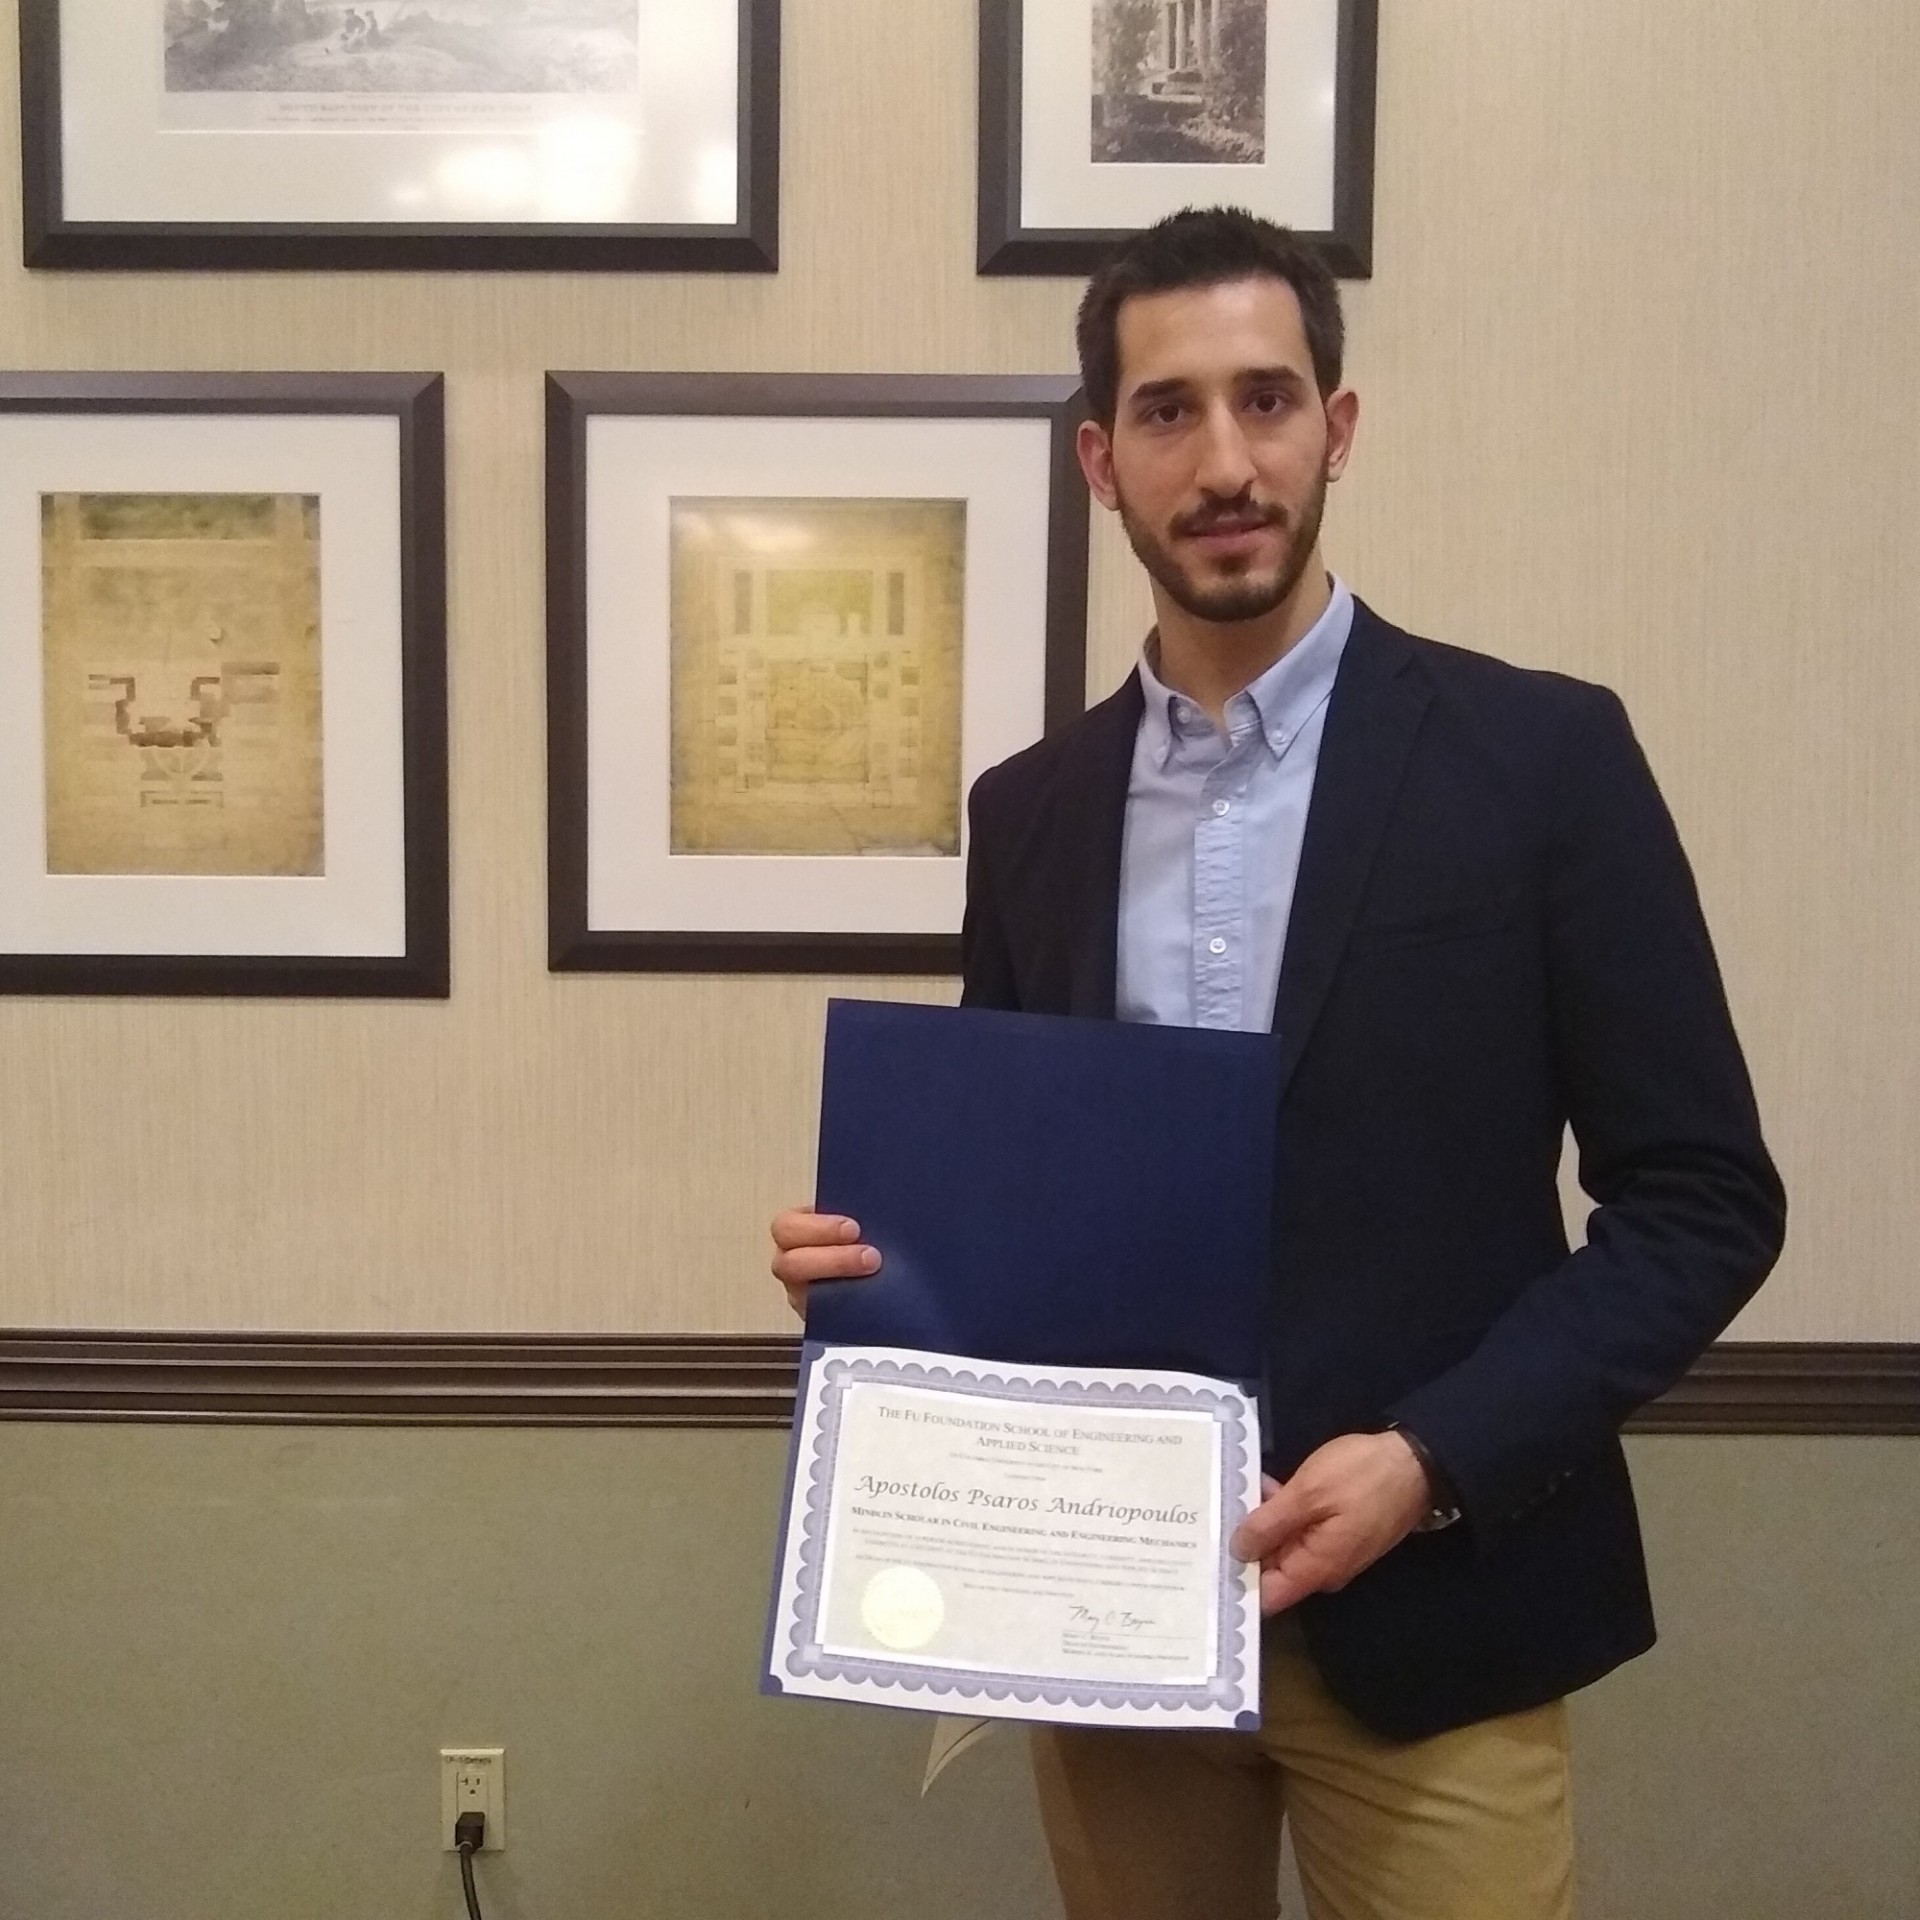 PhD student Apostolos Psaros receives the Mindlin Scholar Award